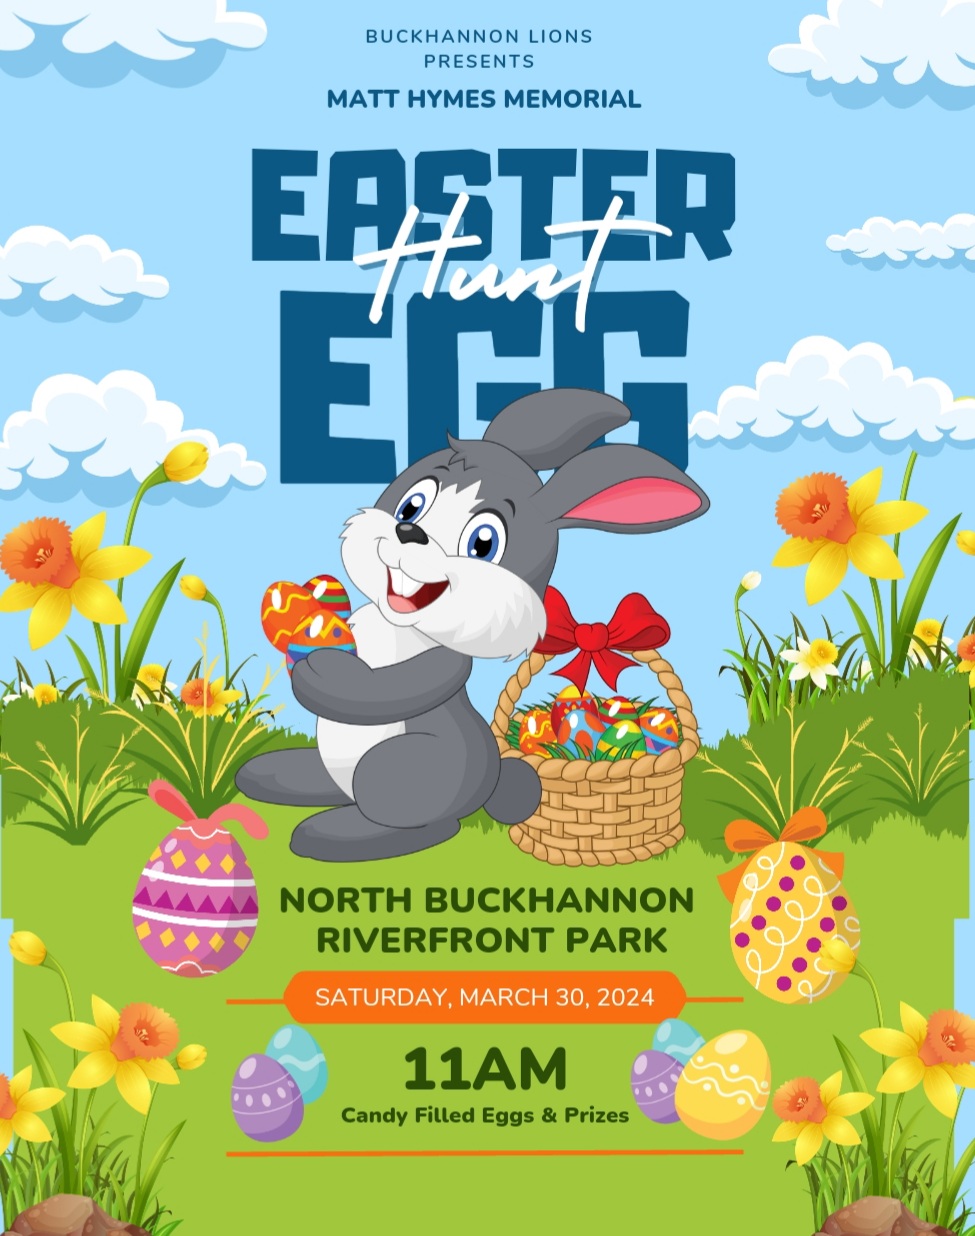 BLC – Matt Hymes Memorial Easter Egg Hunt